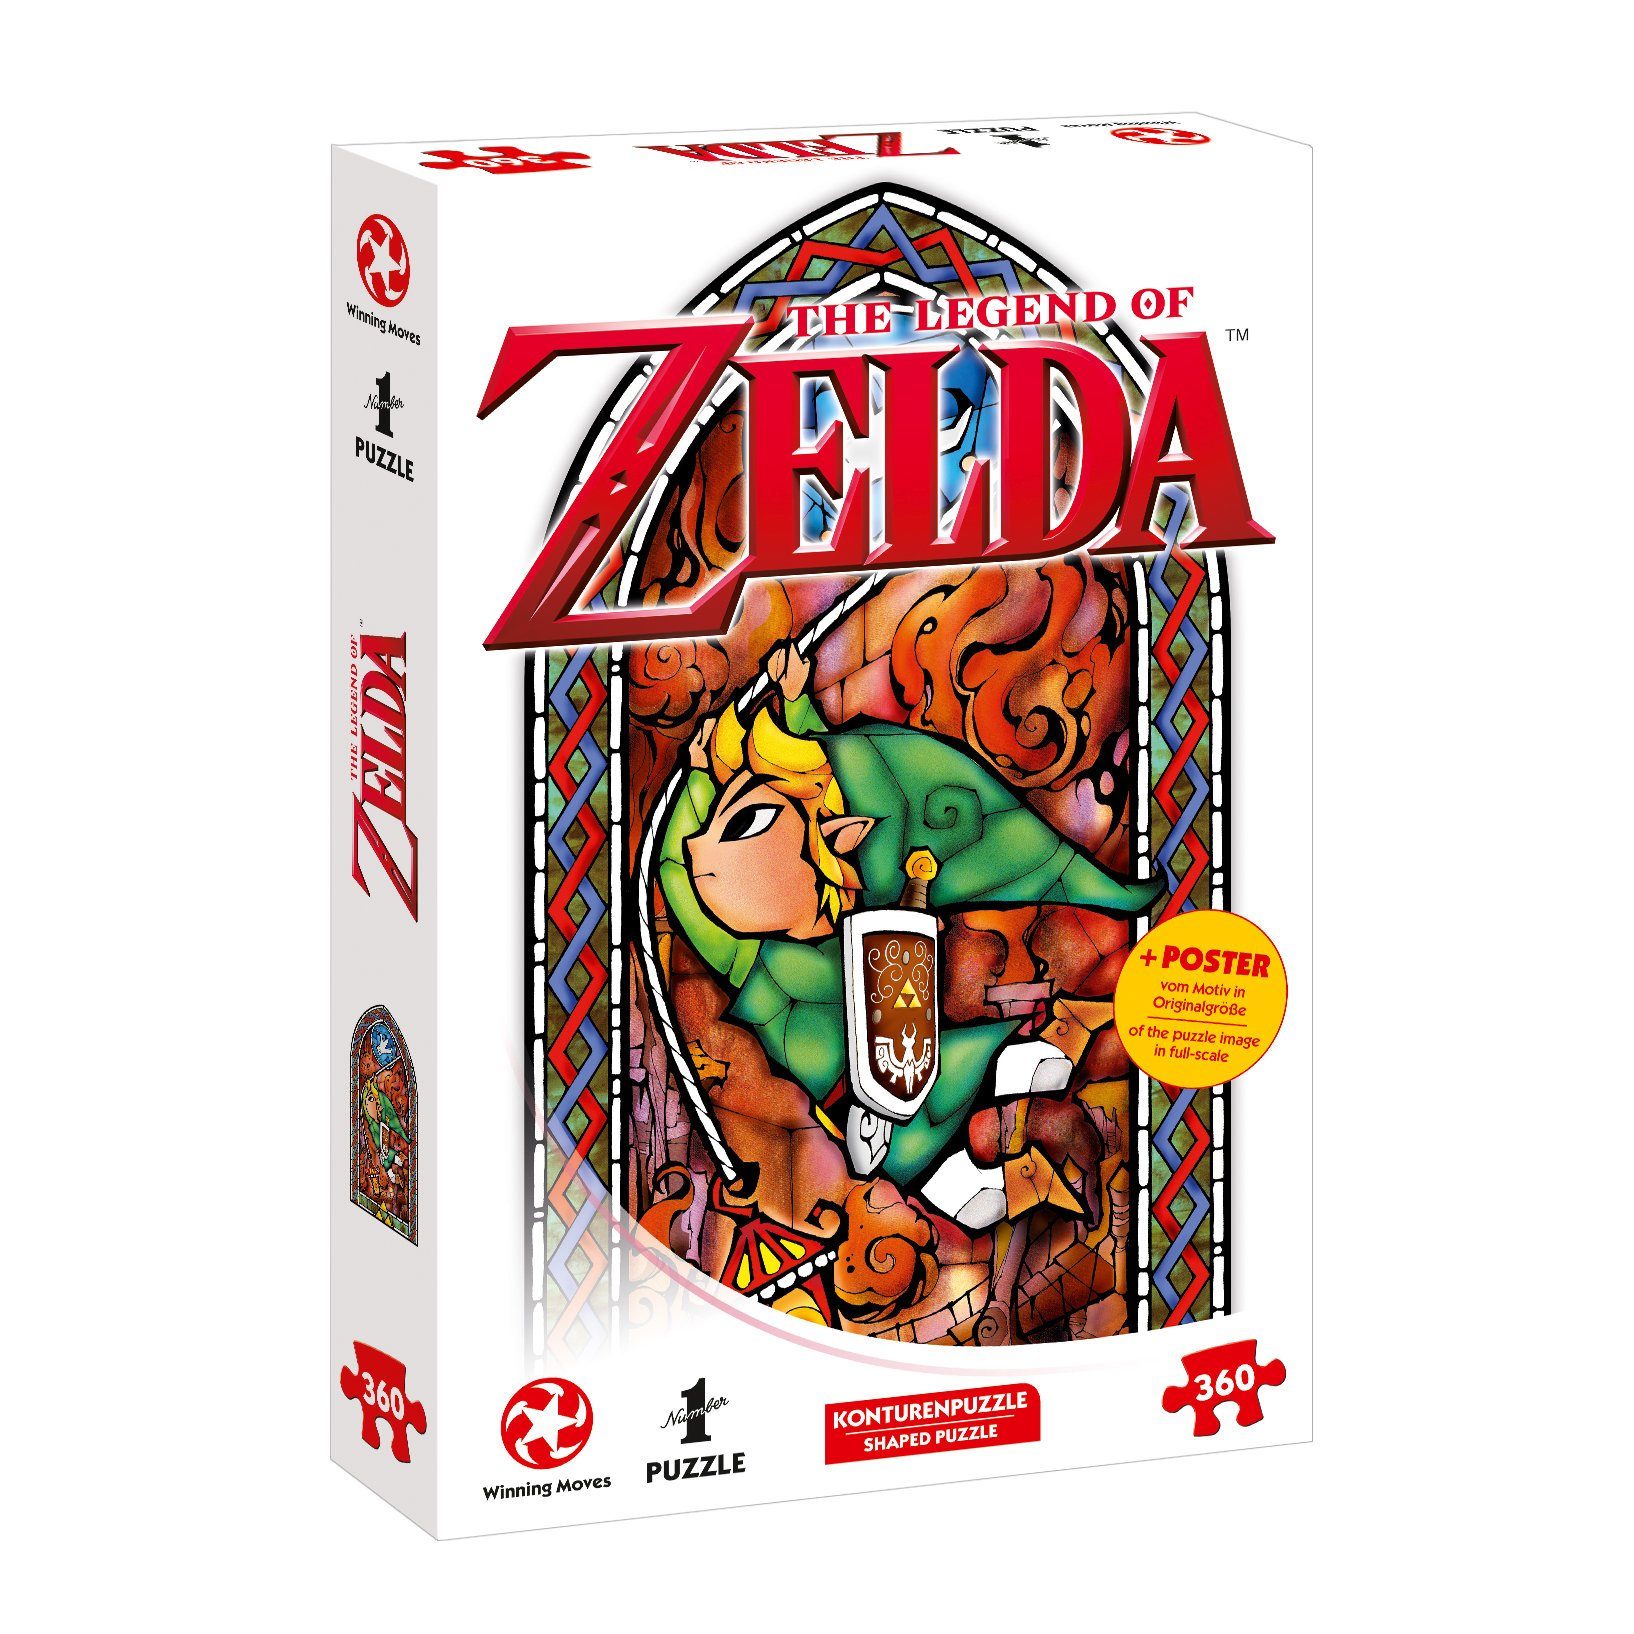 Winning Moves Puzzle Puzzle Zelda Puzzleteile 360 Link-Adventurer 360 Teile